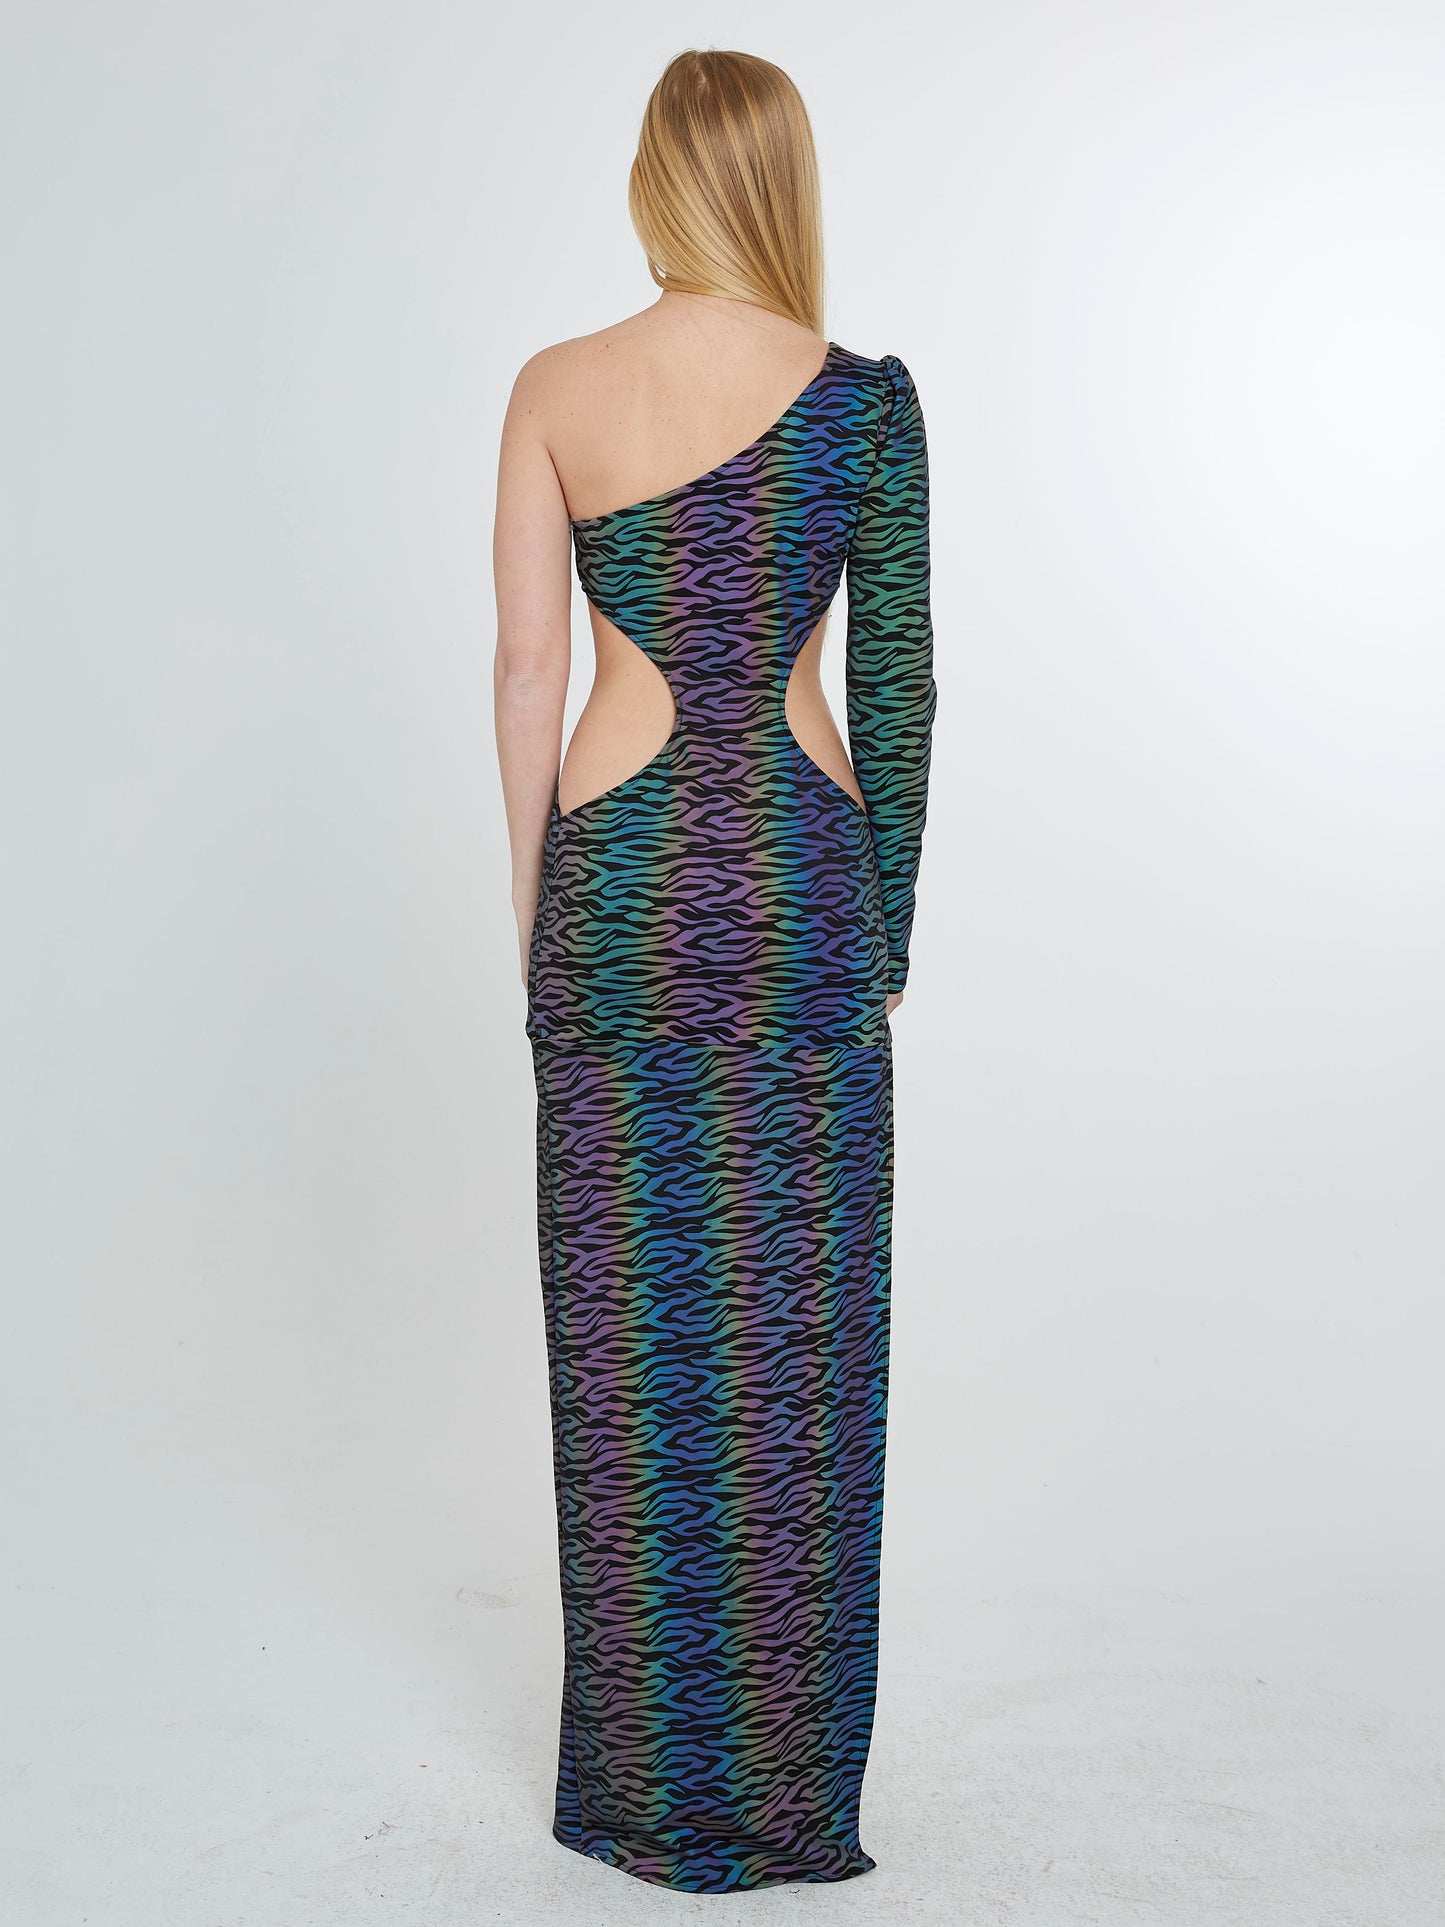 Zebra rainbow reflective long dress with slit